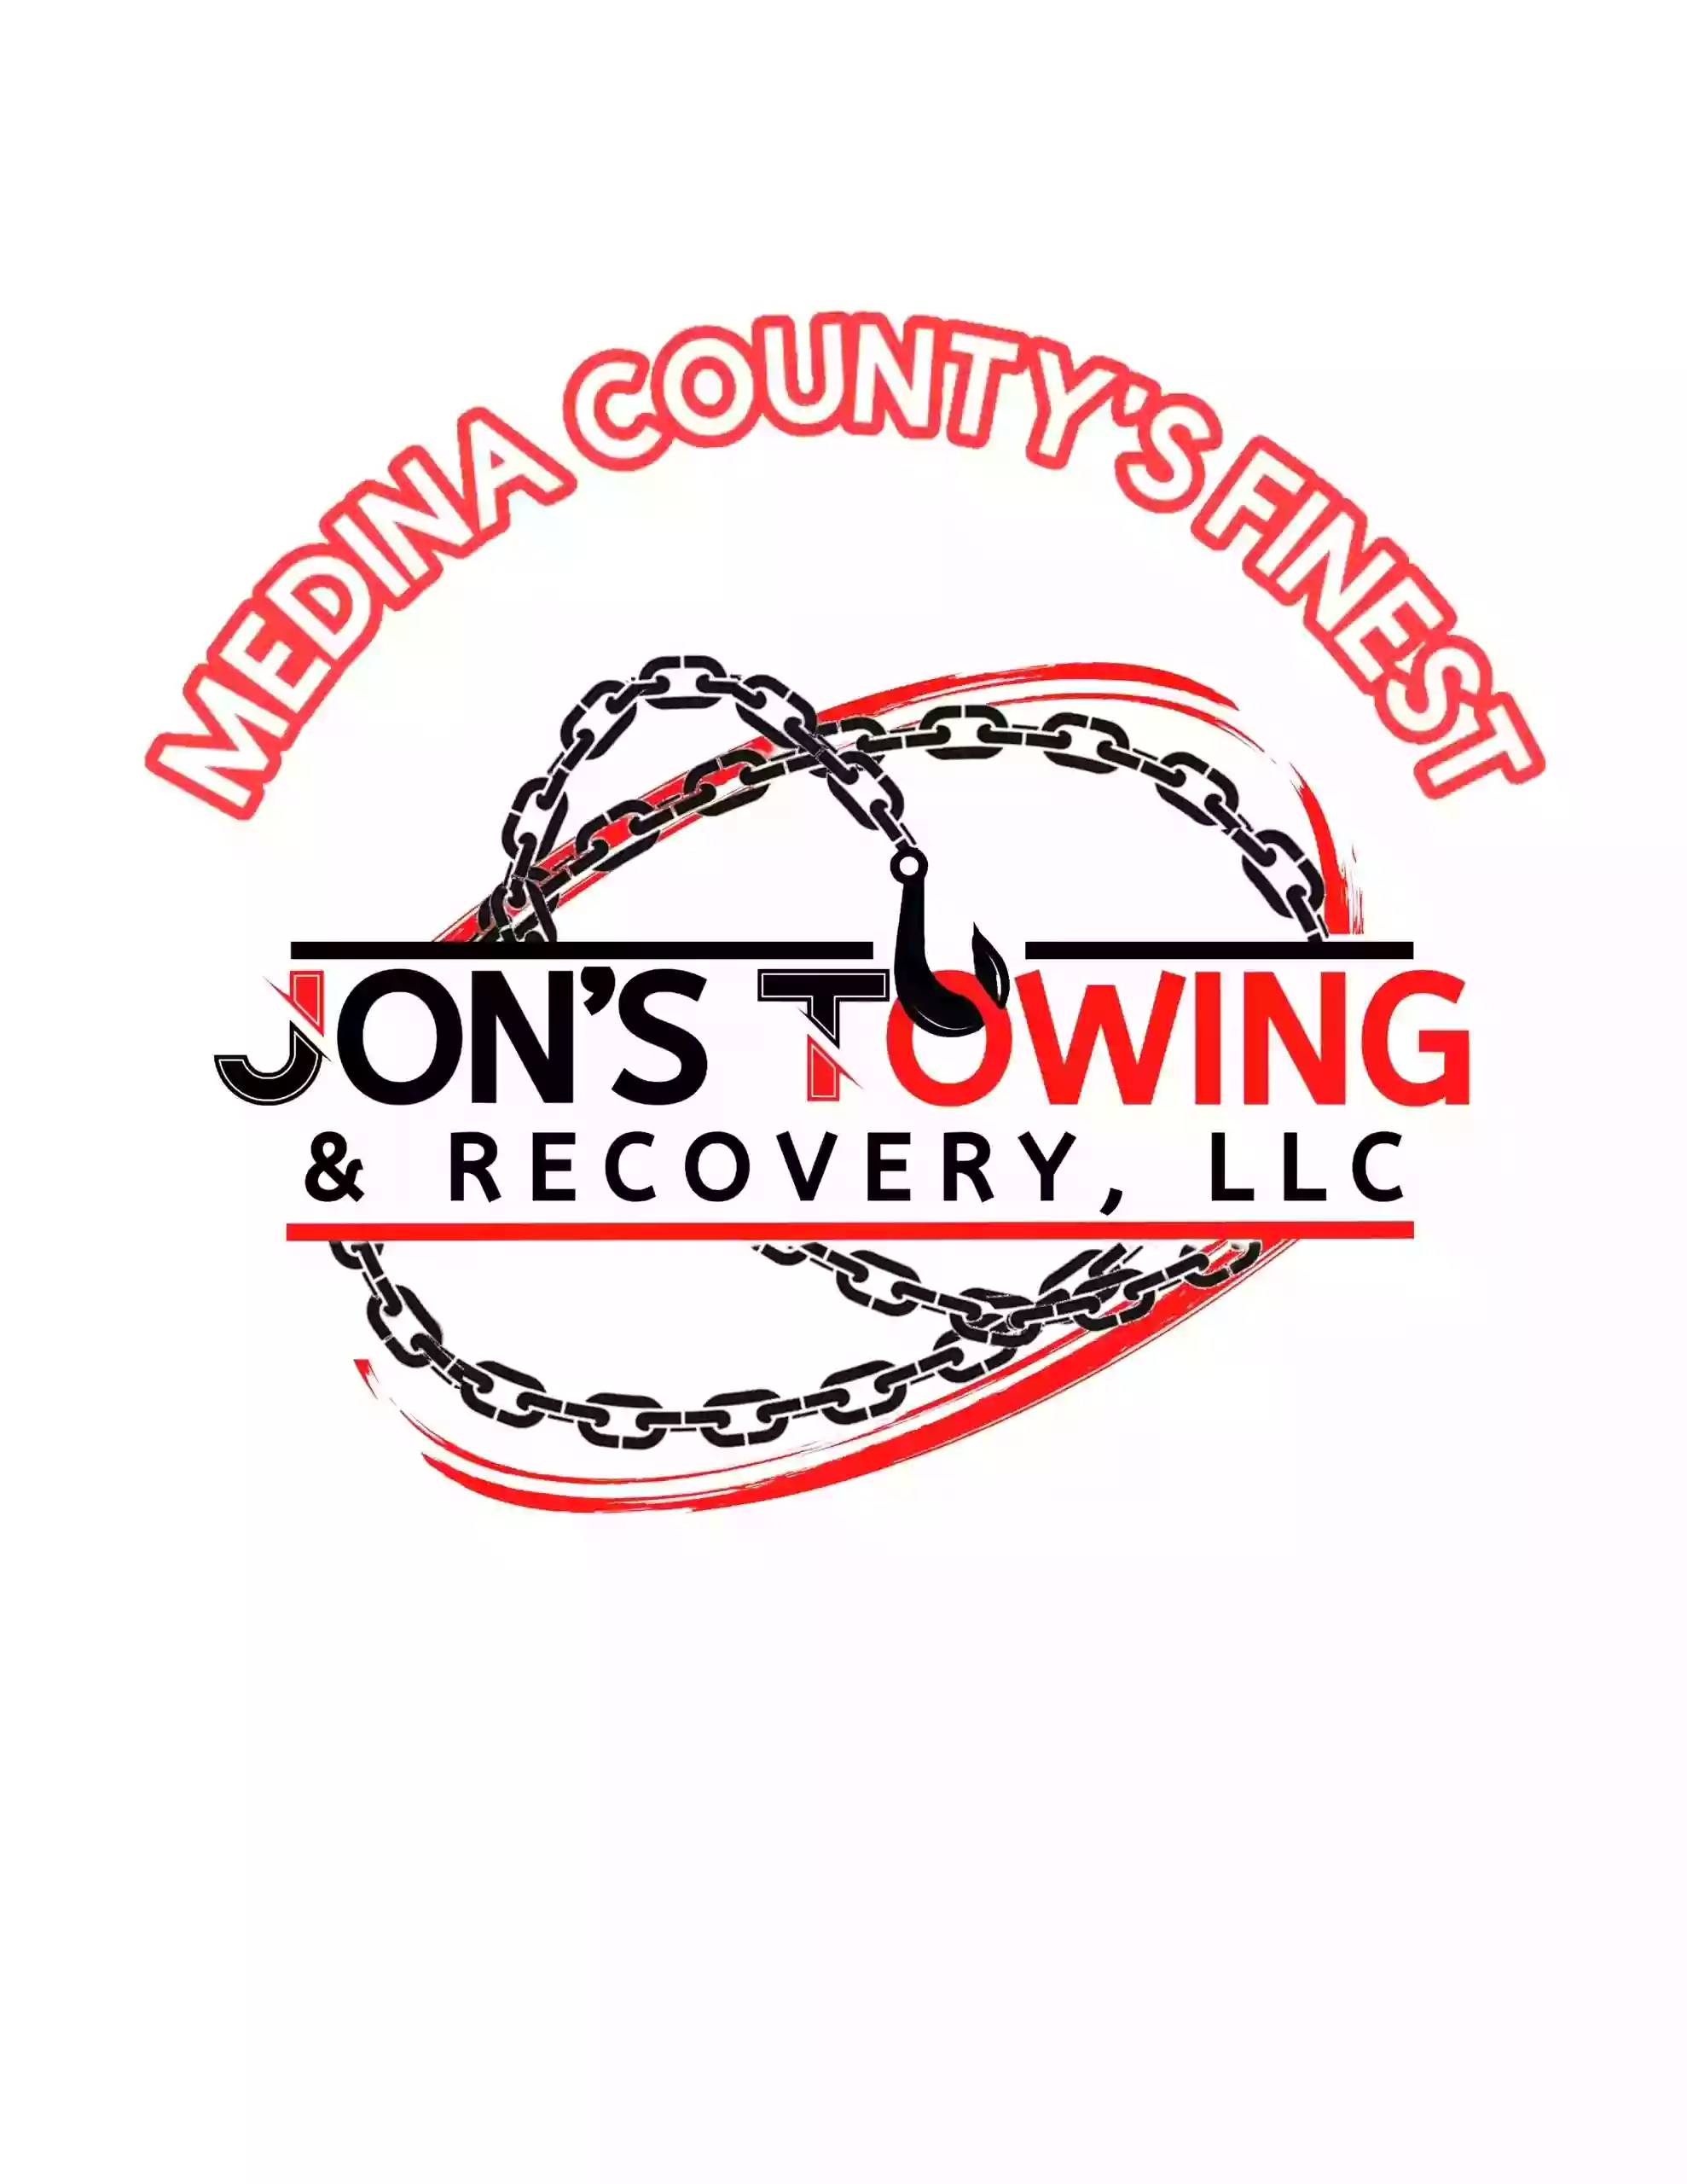 Jon's Towing & Recovery LLC.